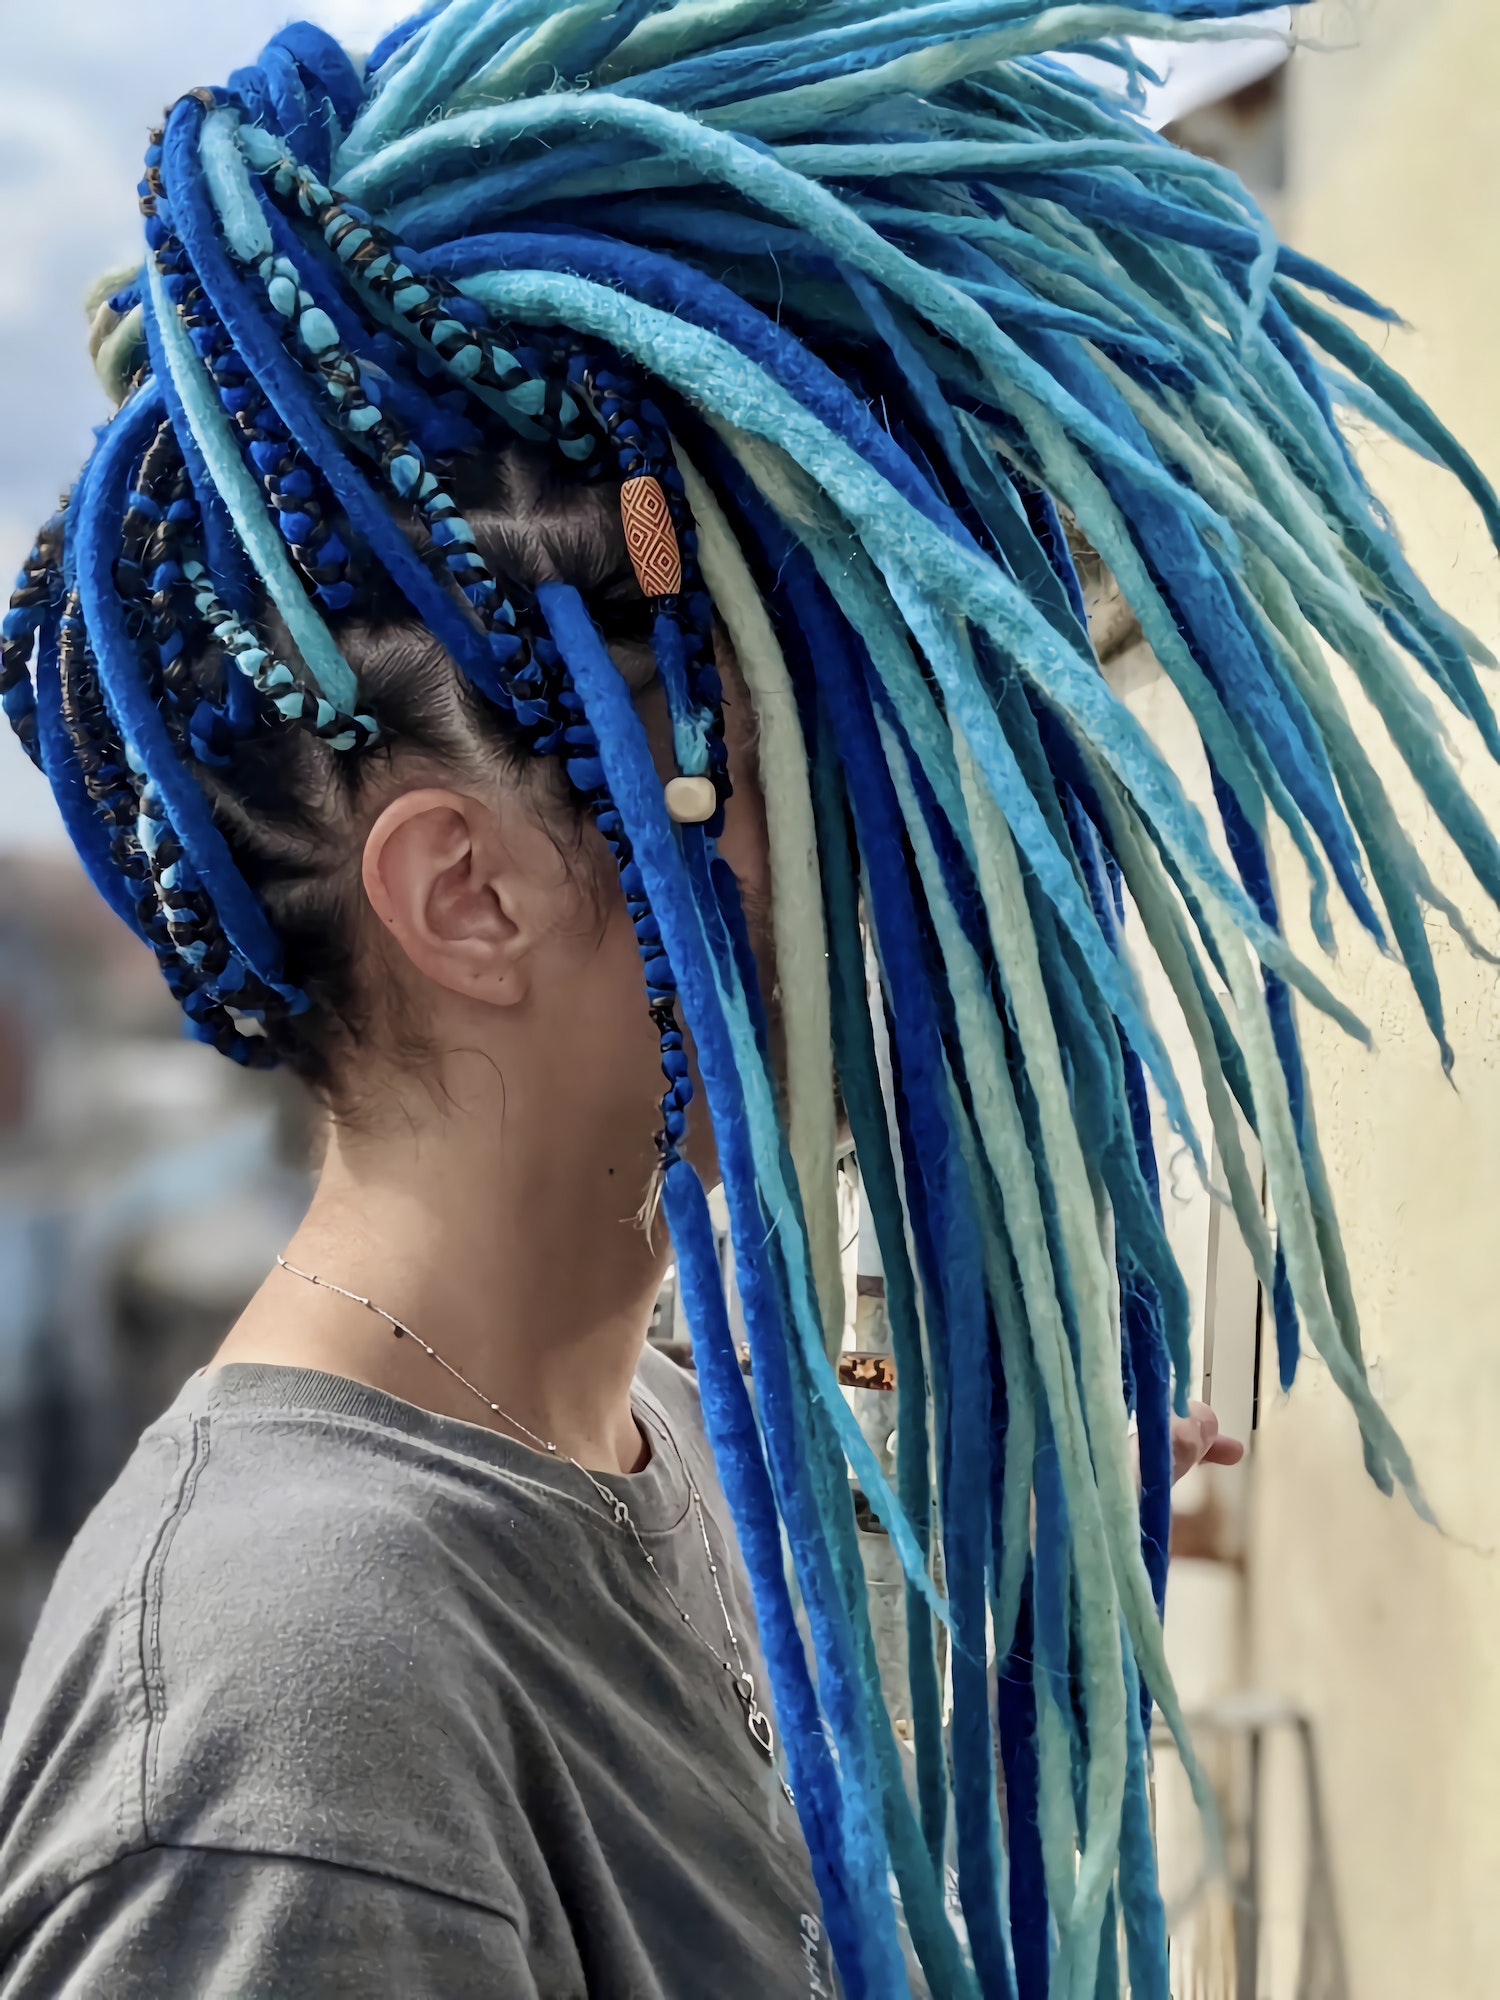 Blue Rasta hair made of wool.